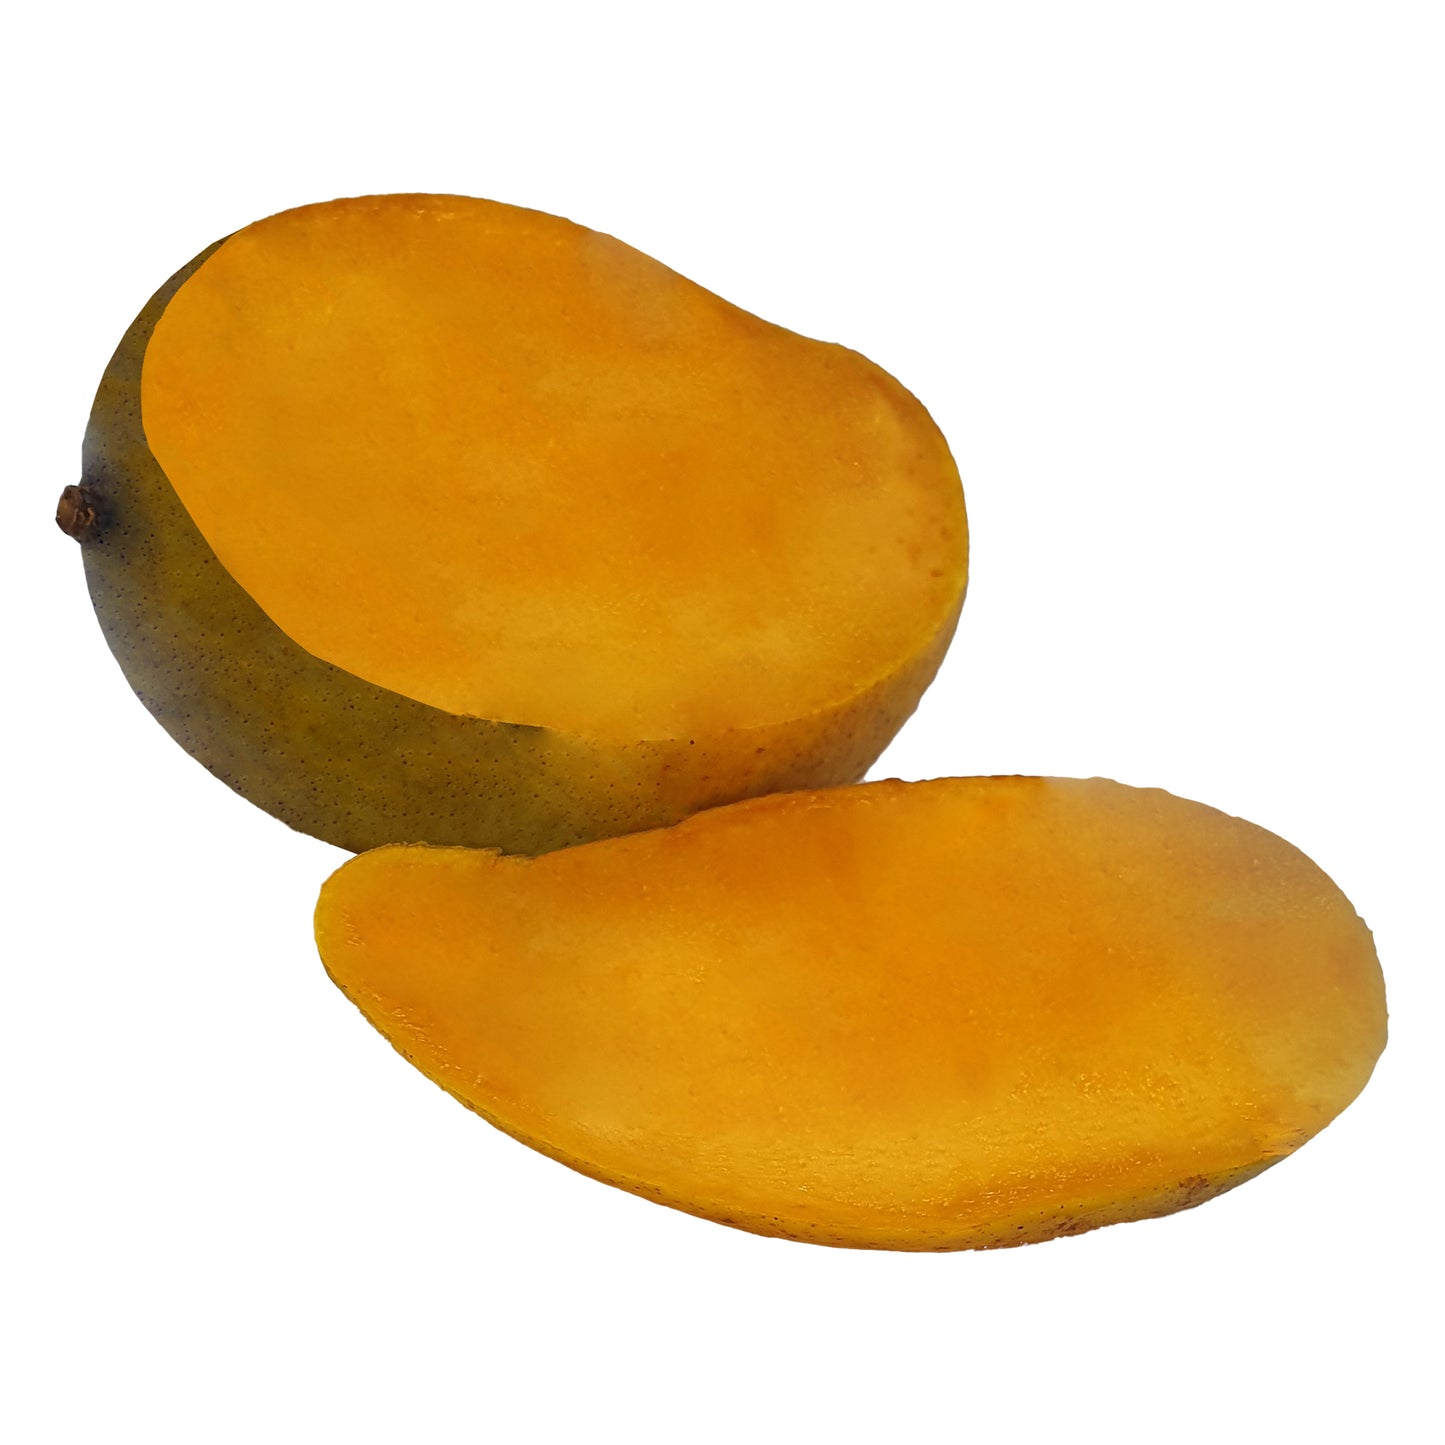 Alphonso Mango (1 kg)